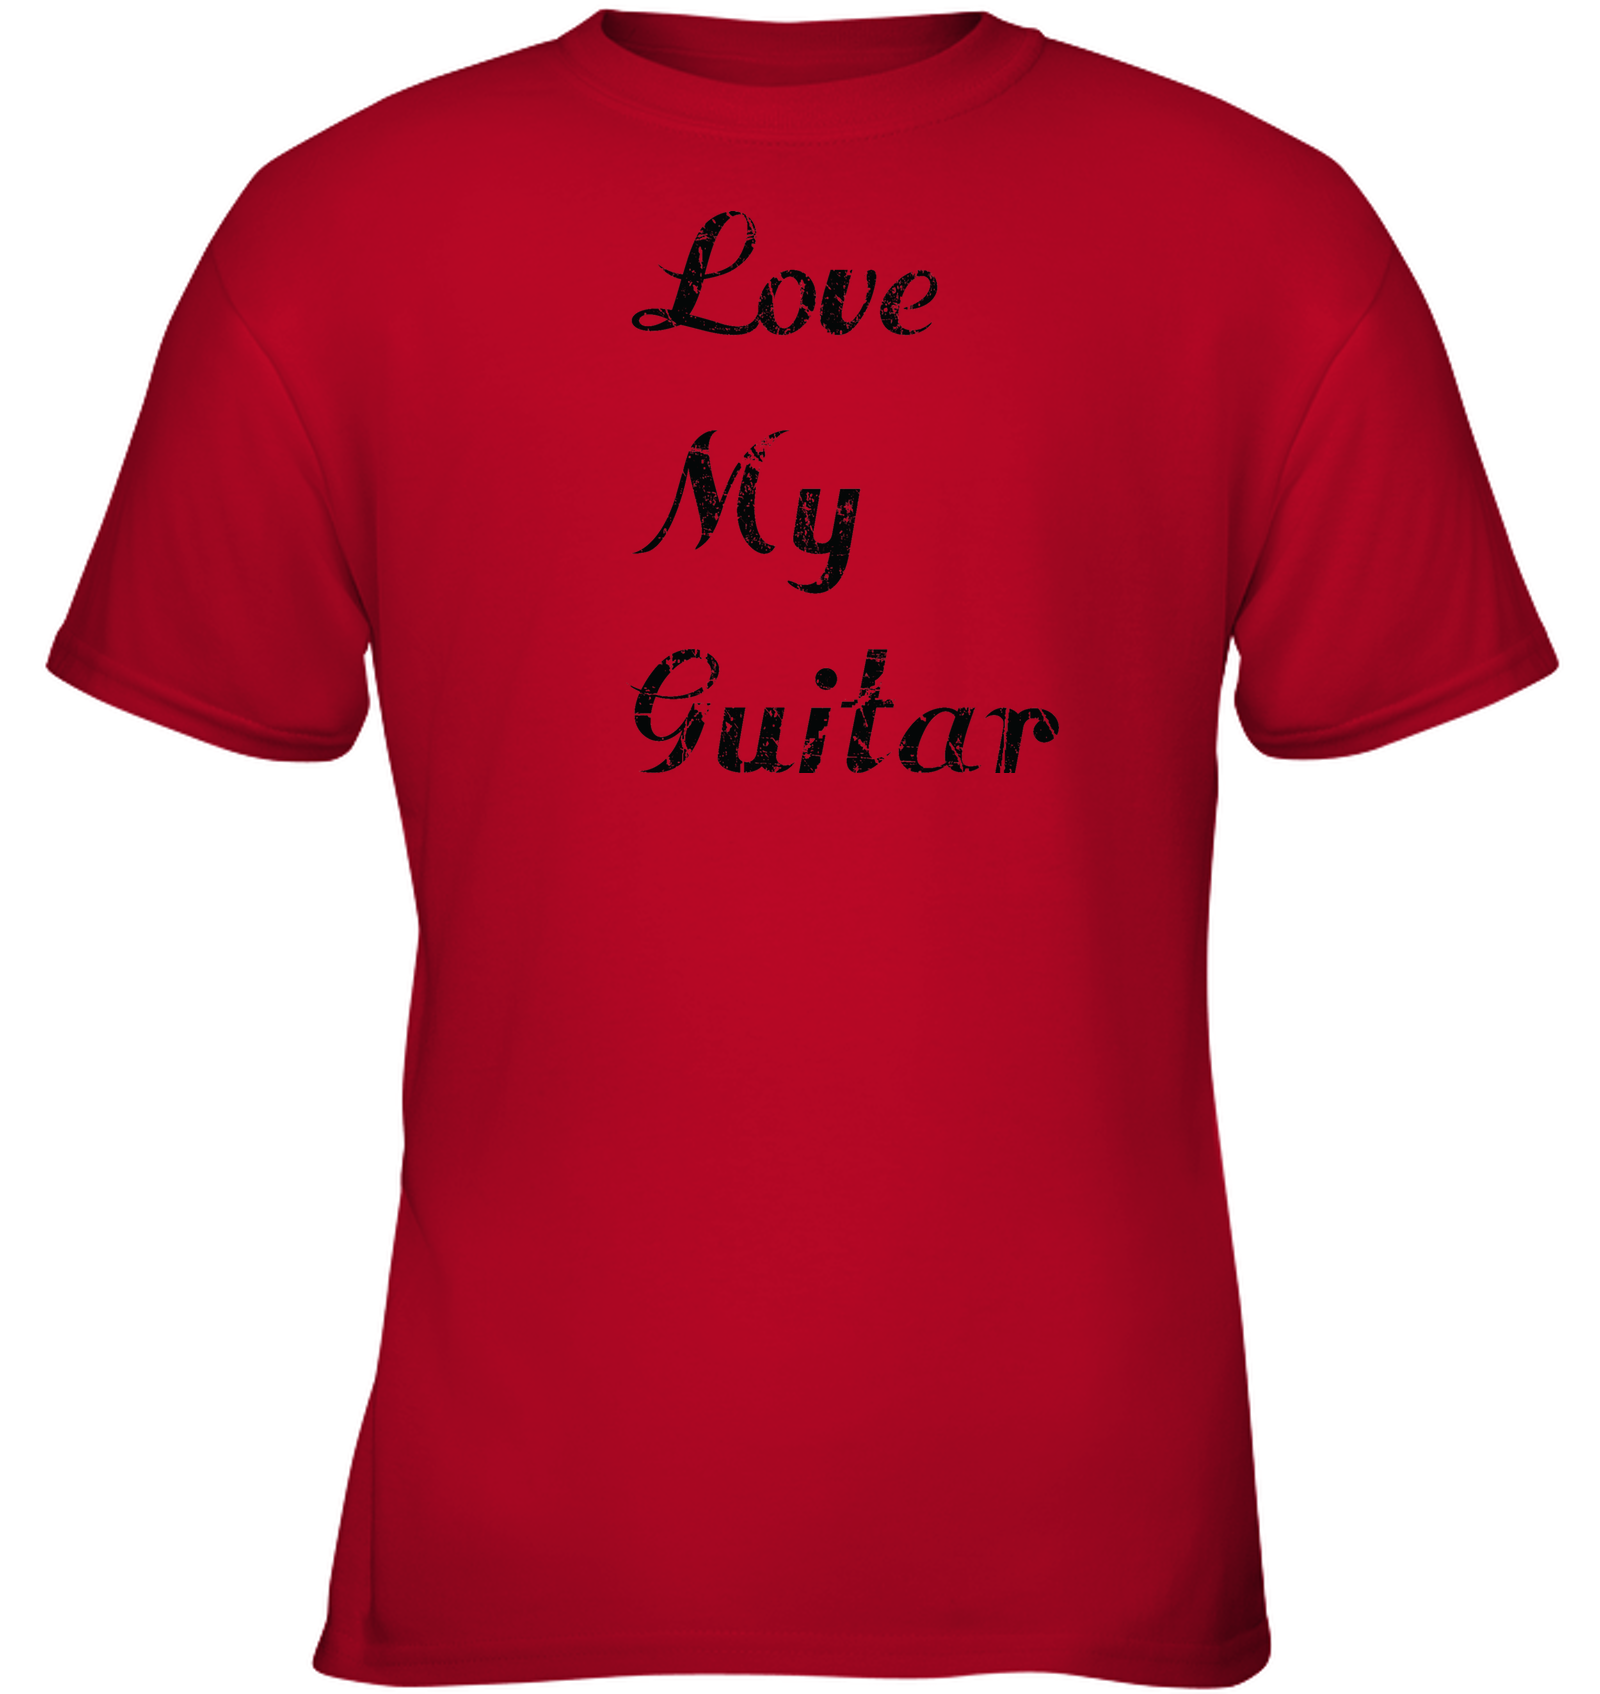 Love My Guitar simple and true - Gildan Youth Short Sleeve T-Shirt